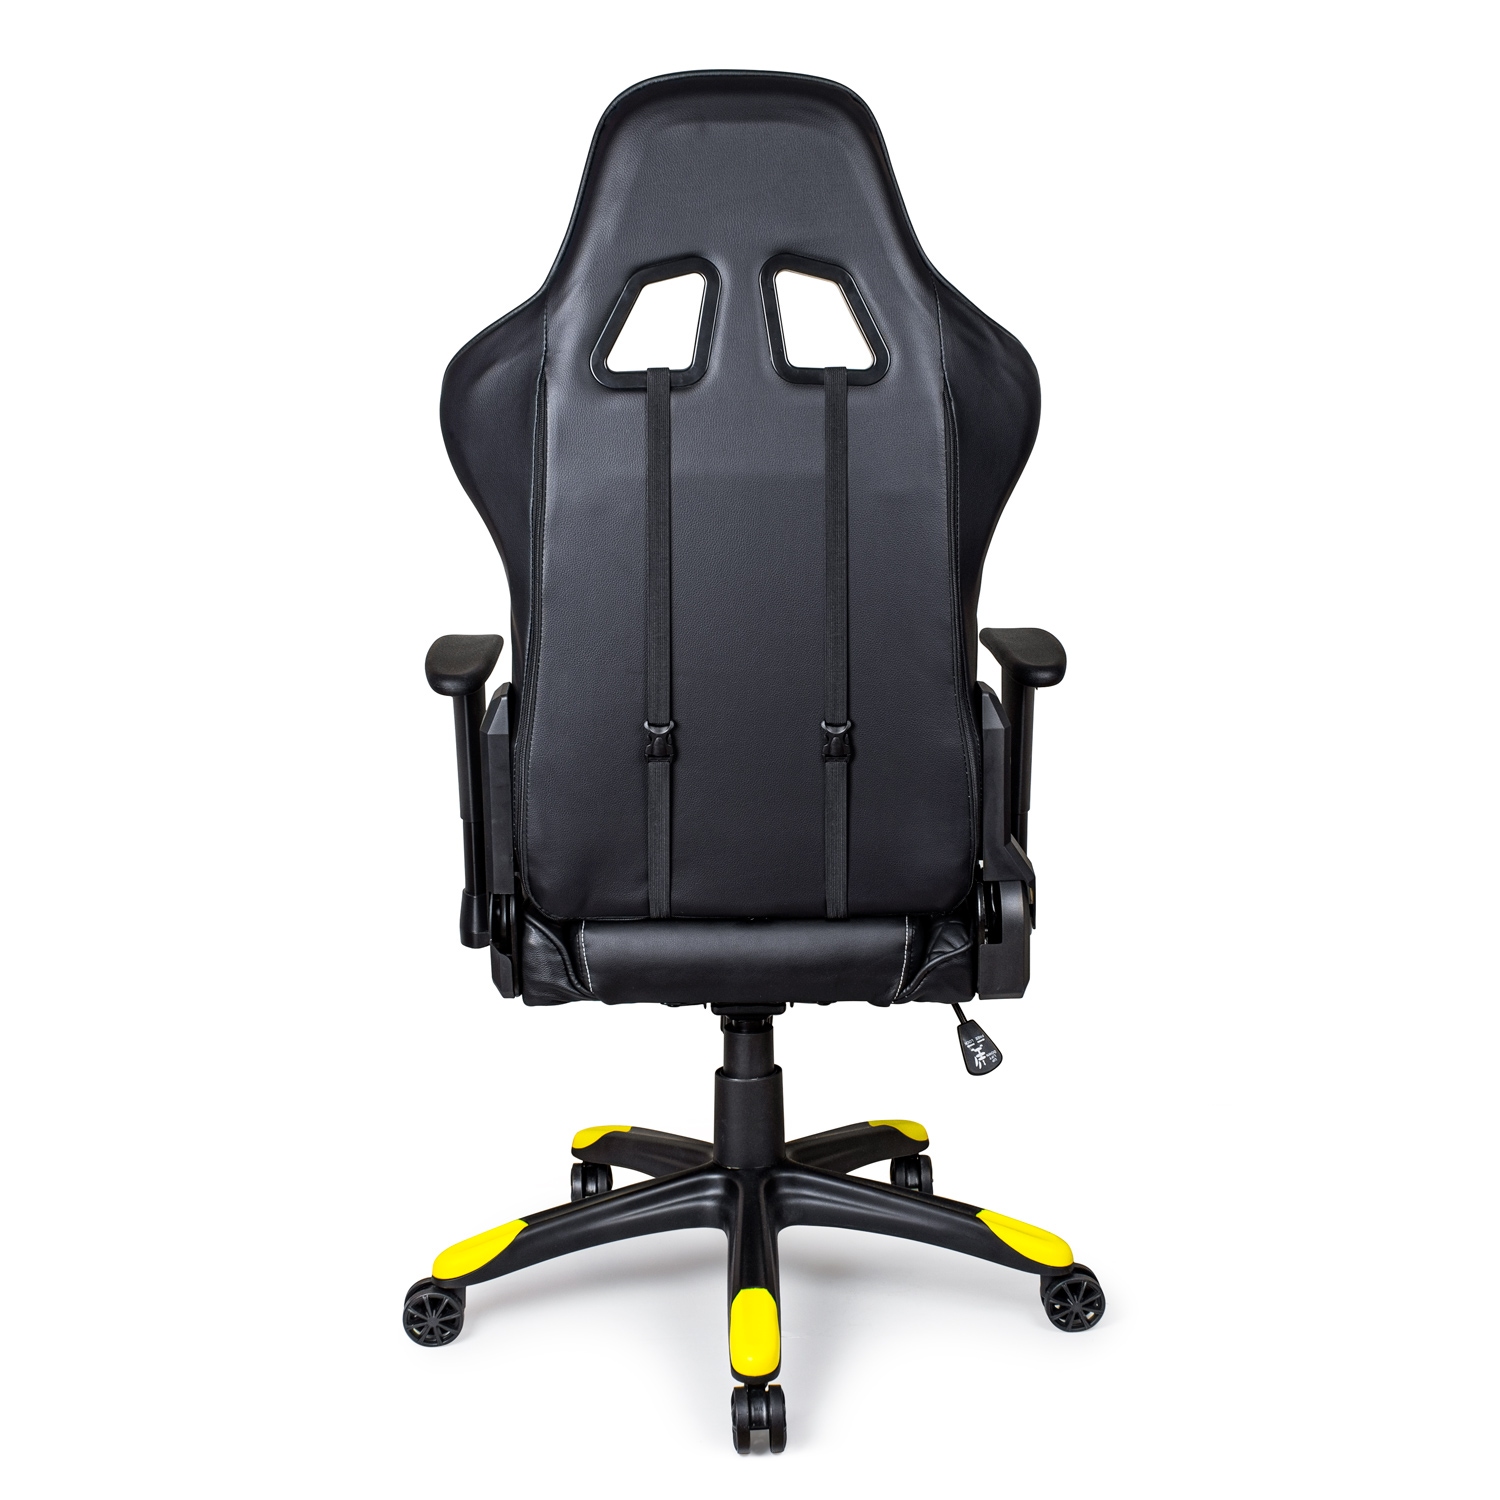 Scaun birou gaming Doctor Shield SV Racer, rotativ, imitatie piele, negru + galben, 1C